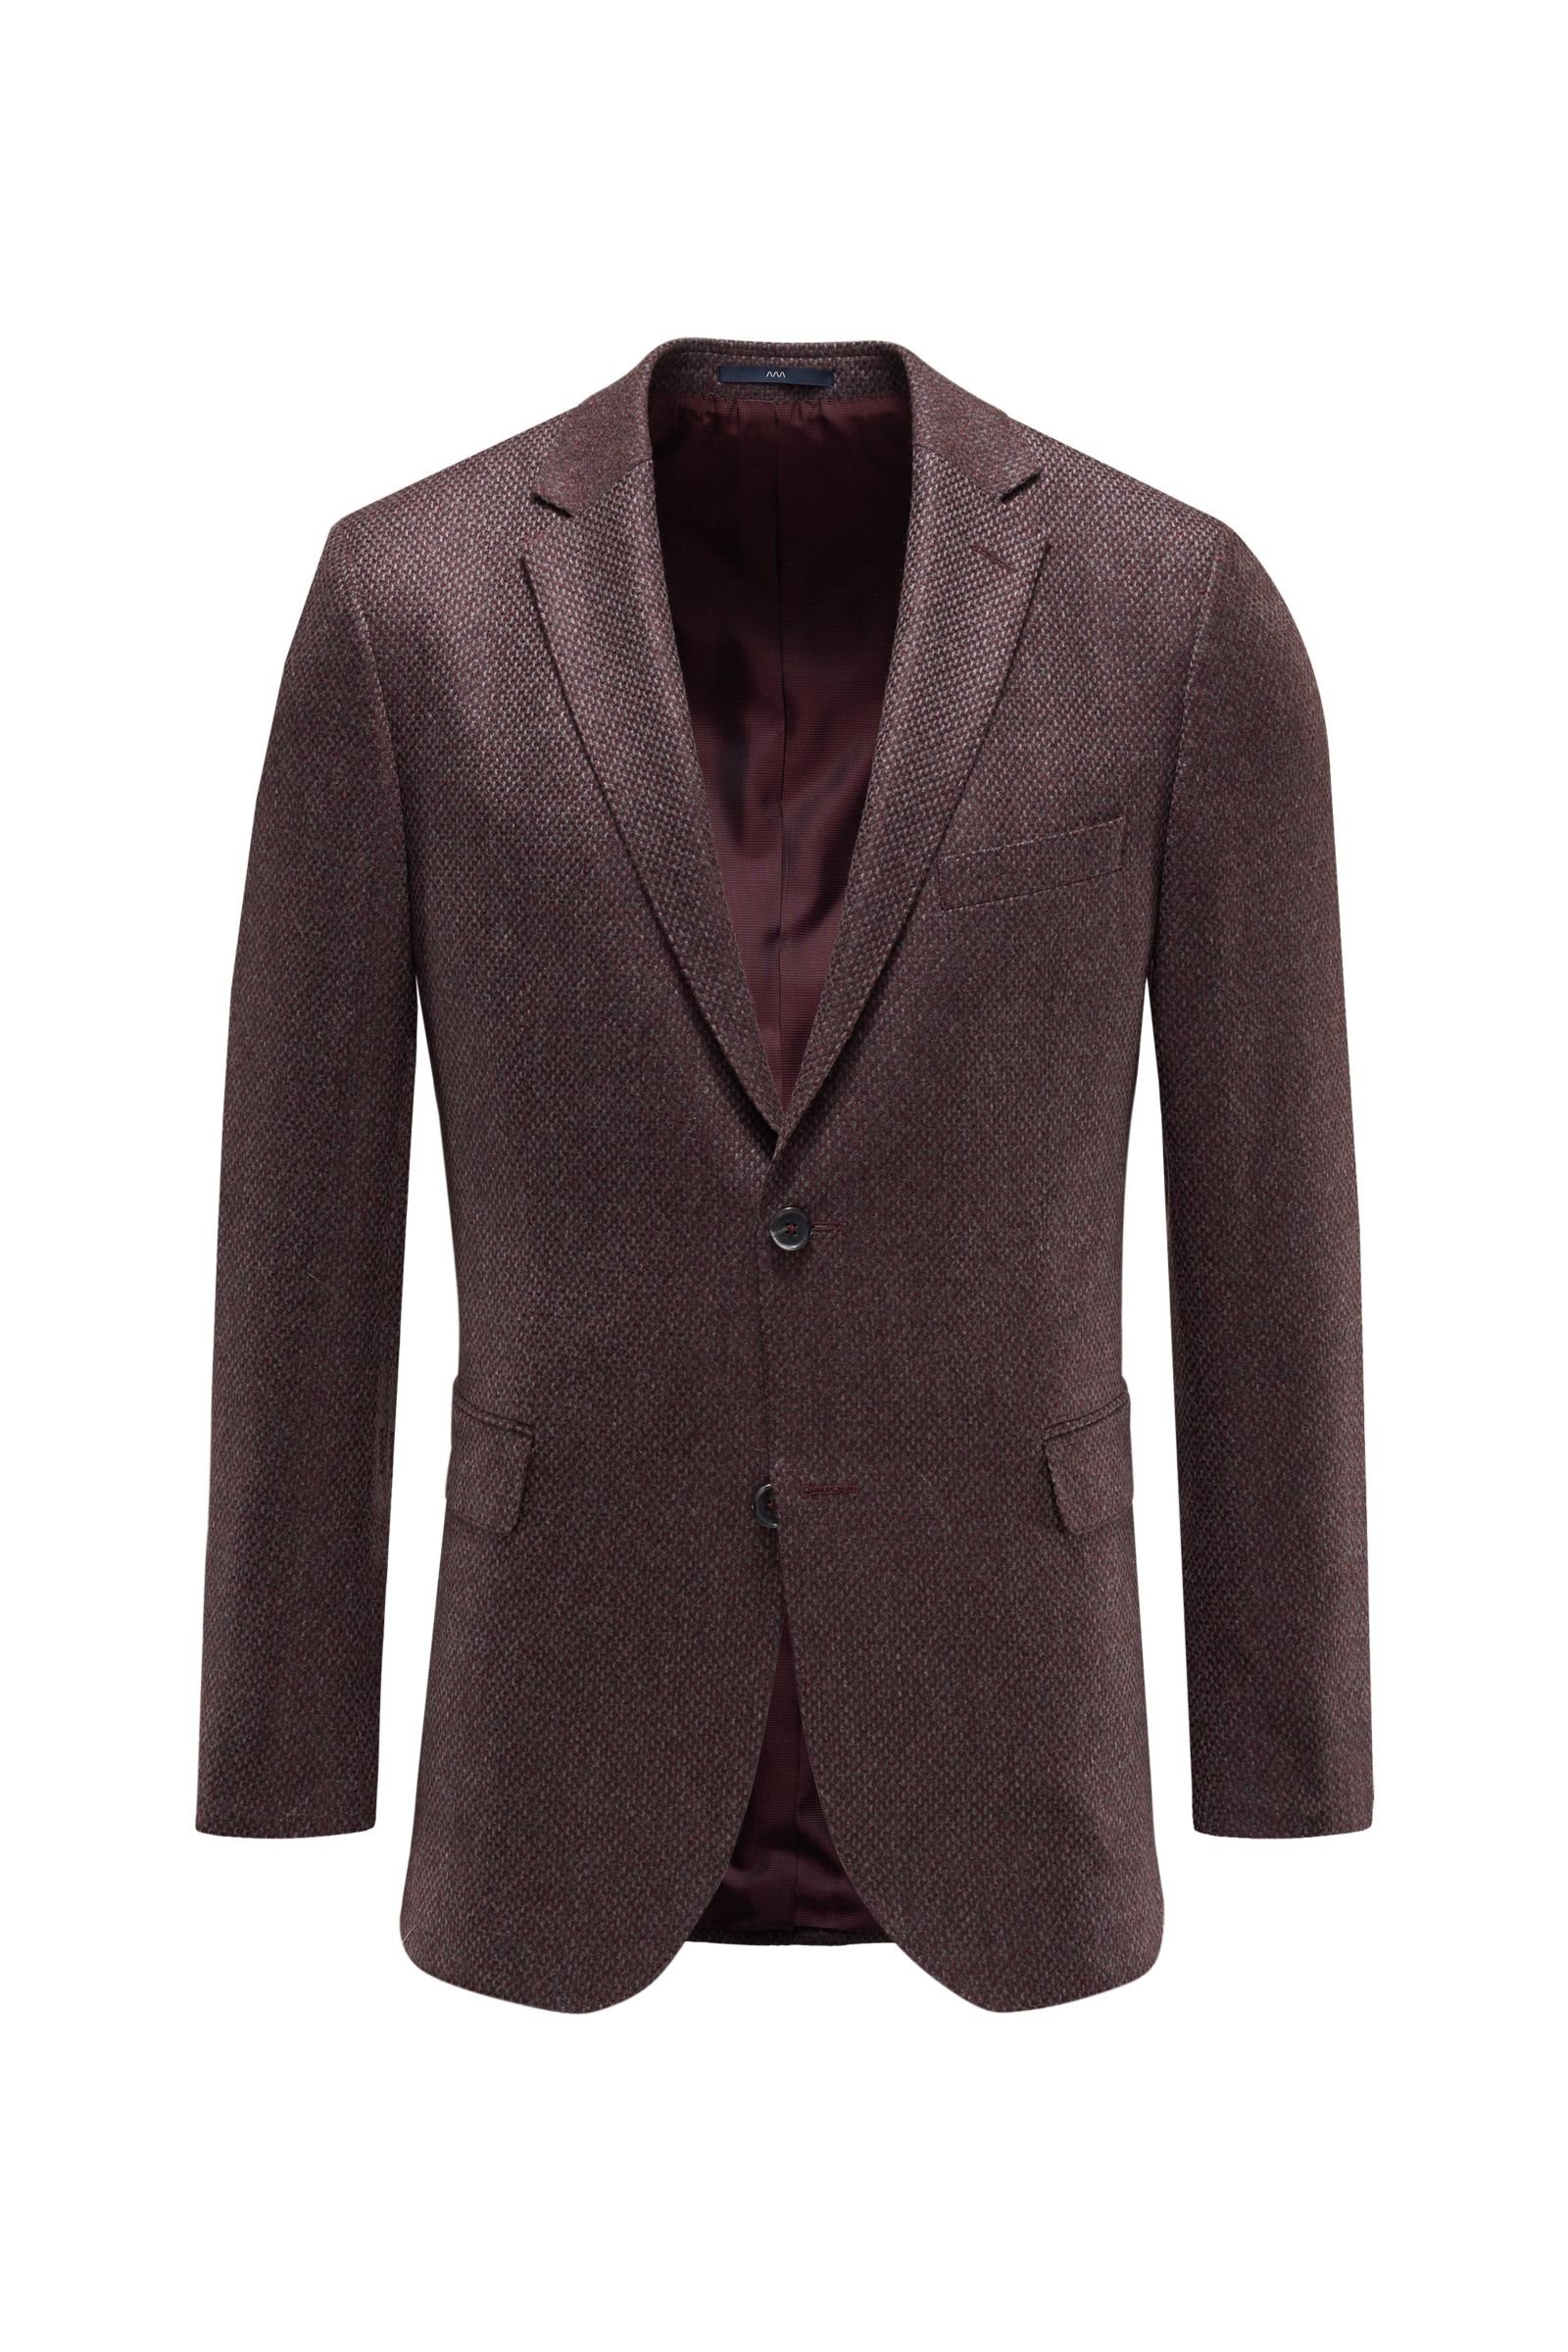 Cashmere smart-casual jacket burgundy patterned